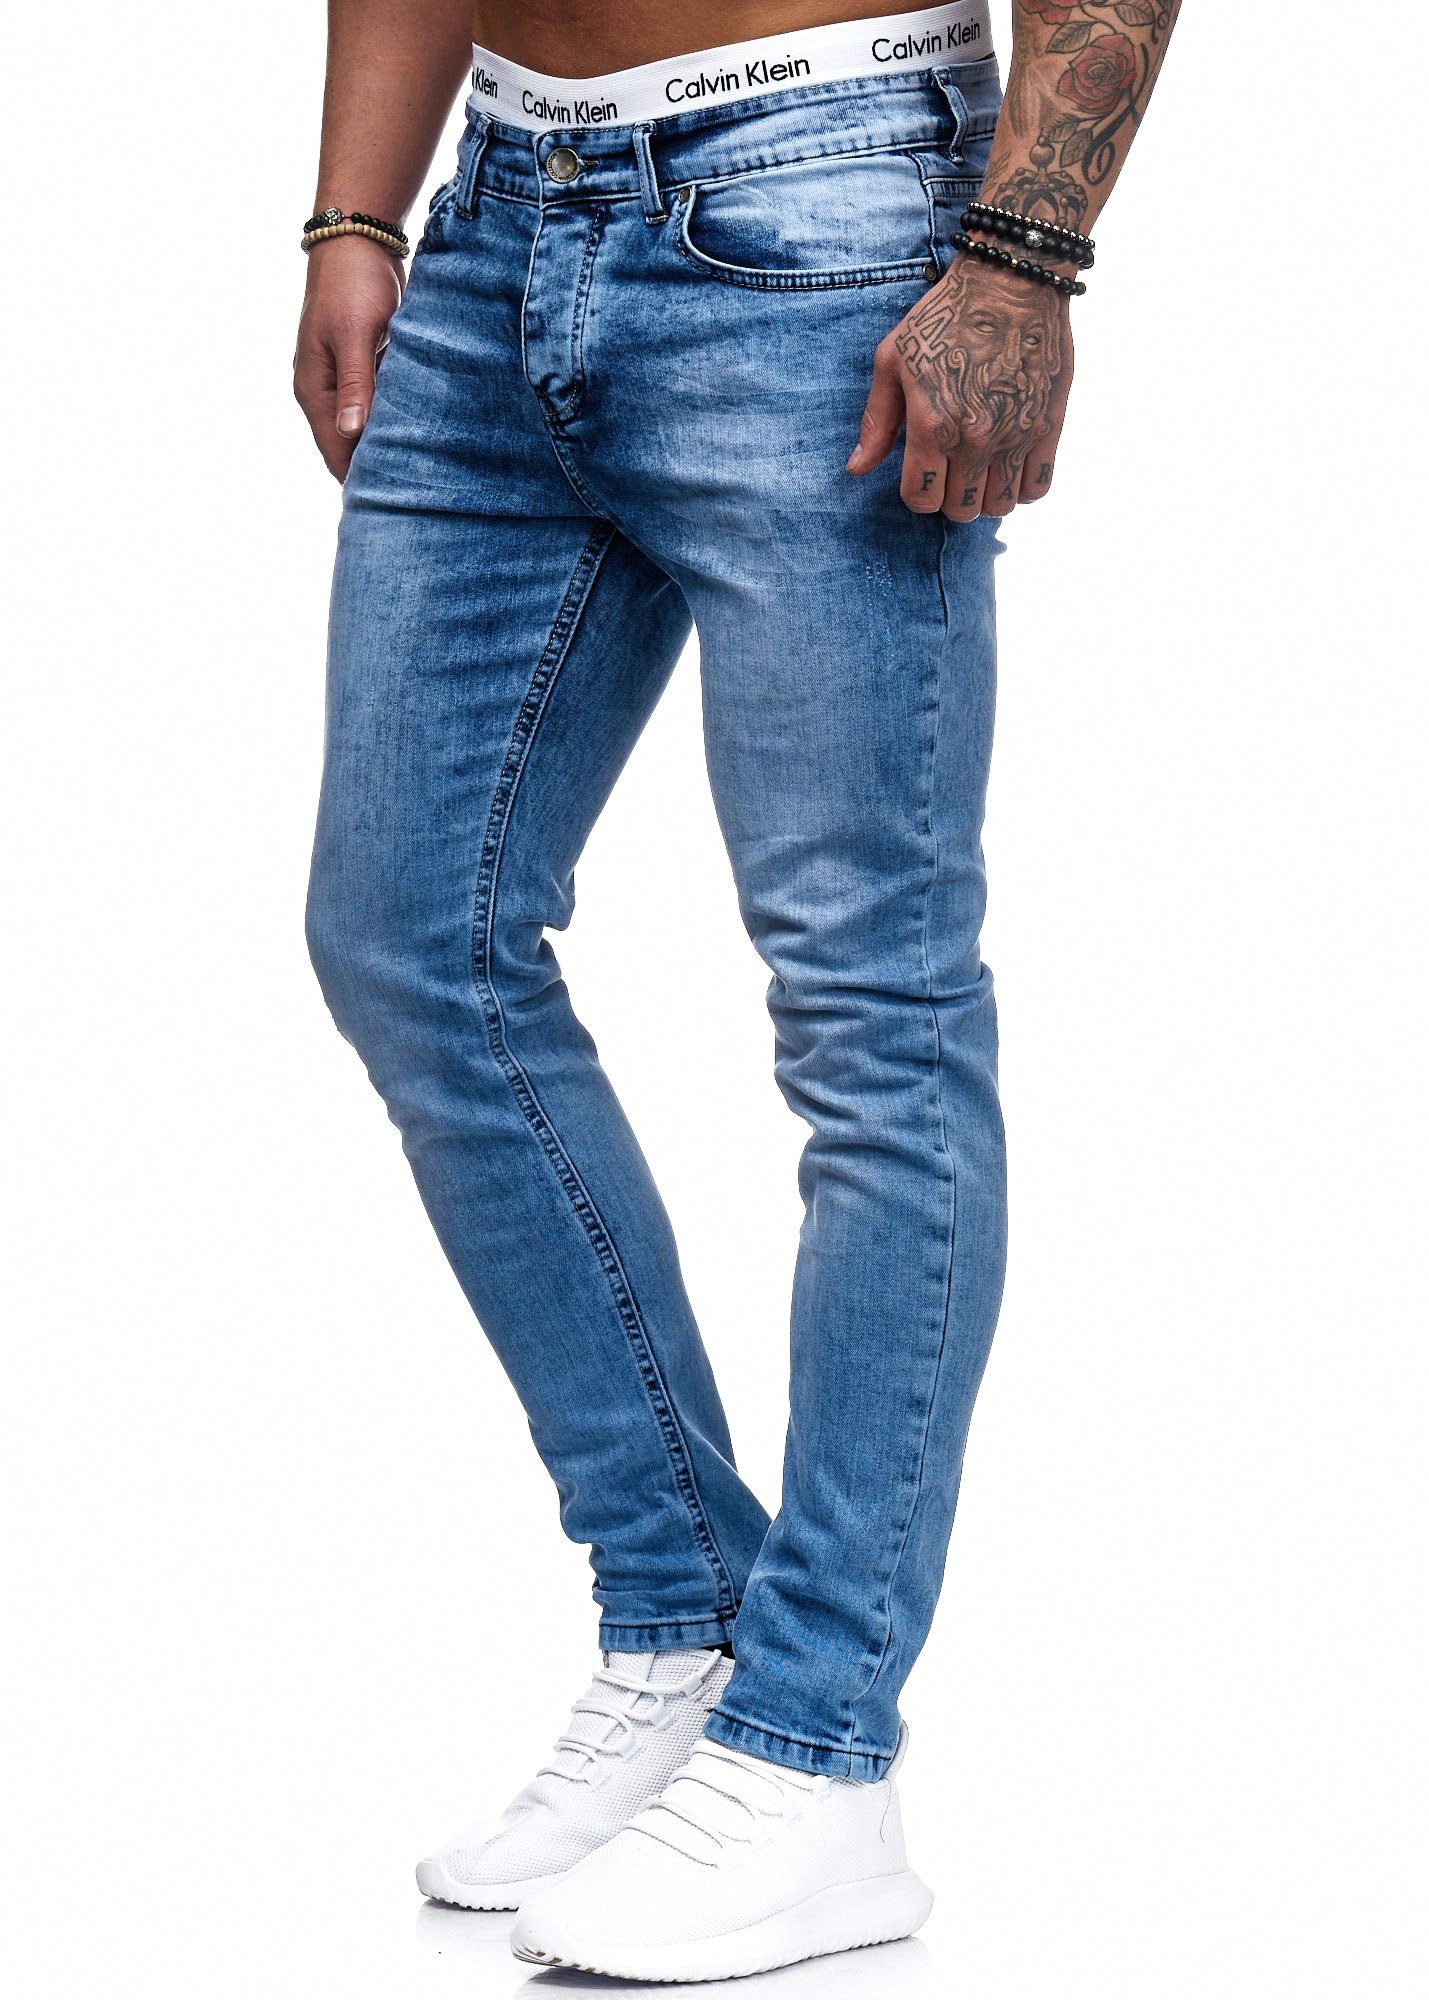 Code47 Slim-fit-Jeans Herren Designer Chino Jeans Hose Basic Stretch Jeanshose Slim Fit Hellblau 5080